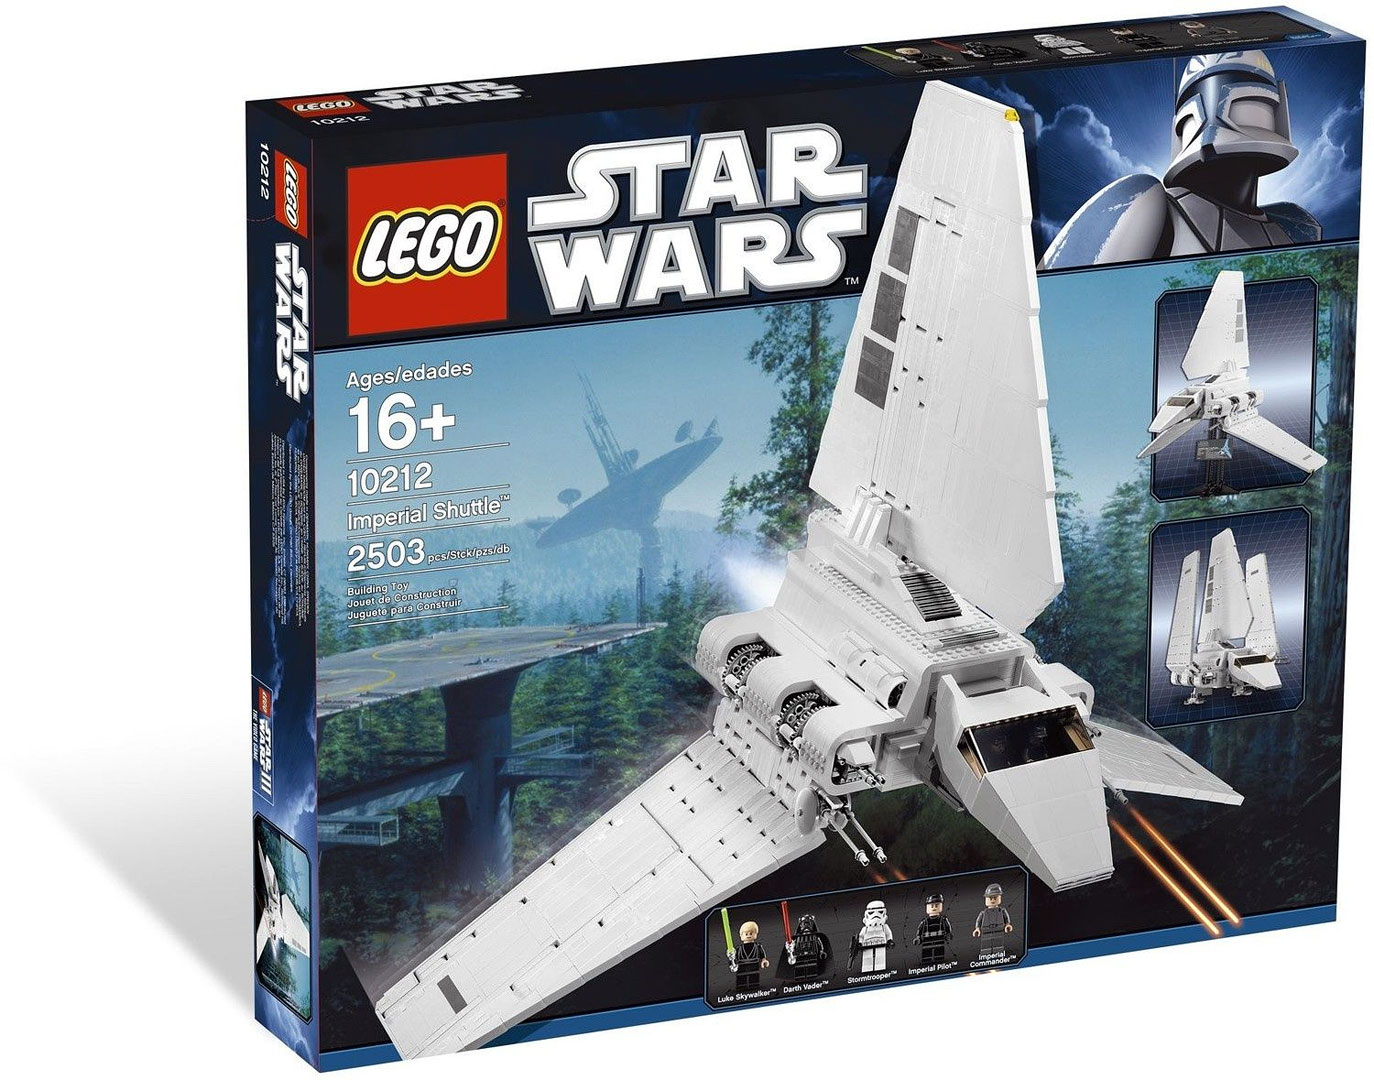 LEGO 10212 Lamba-Class Imperial Shuttle